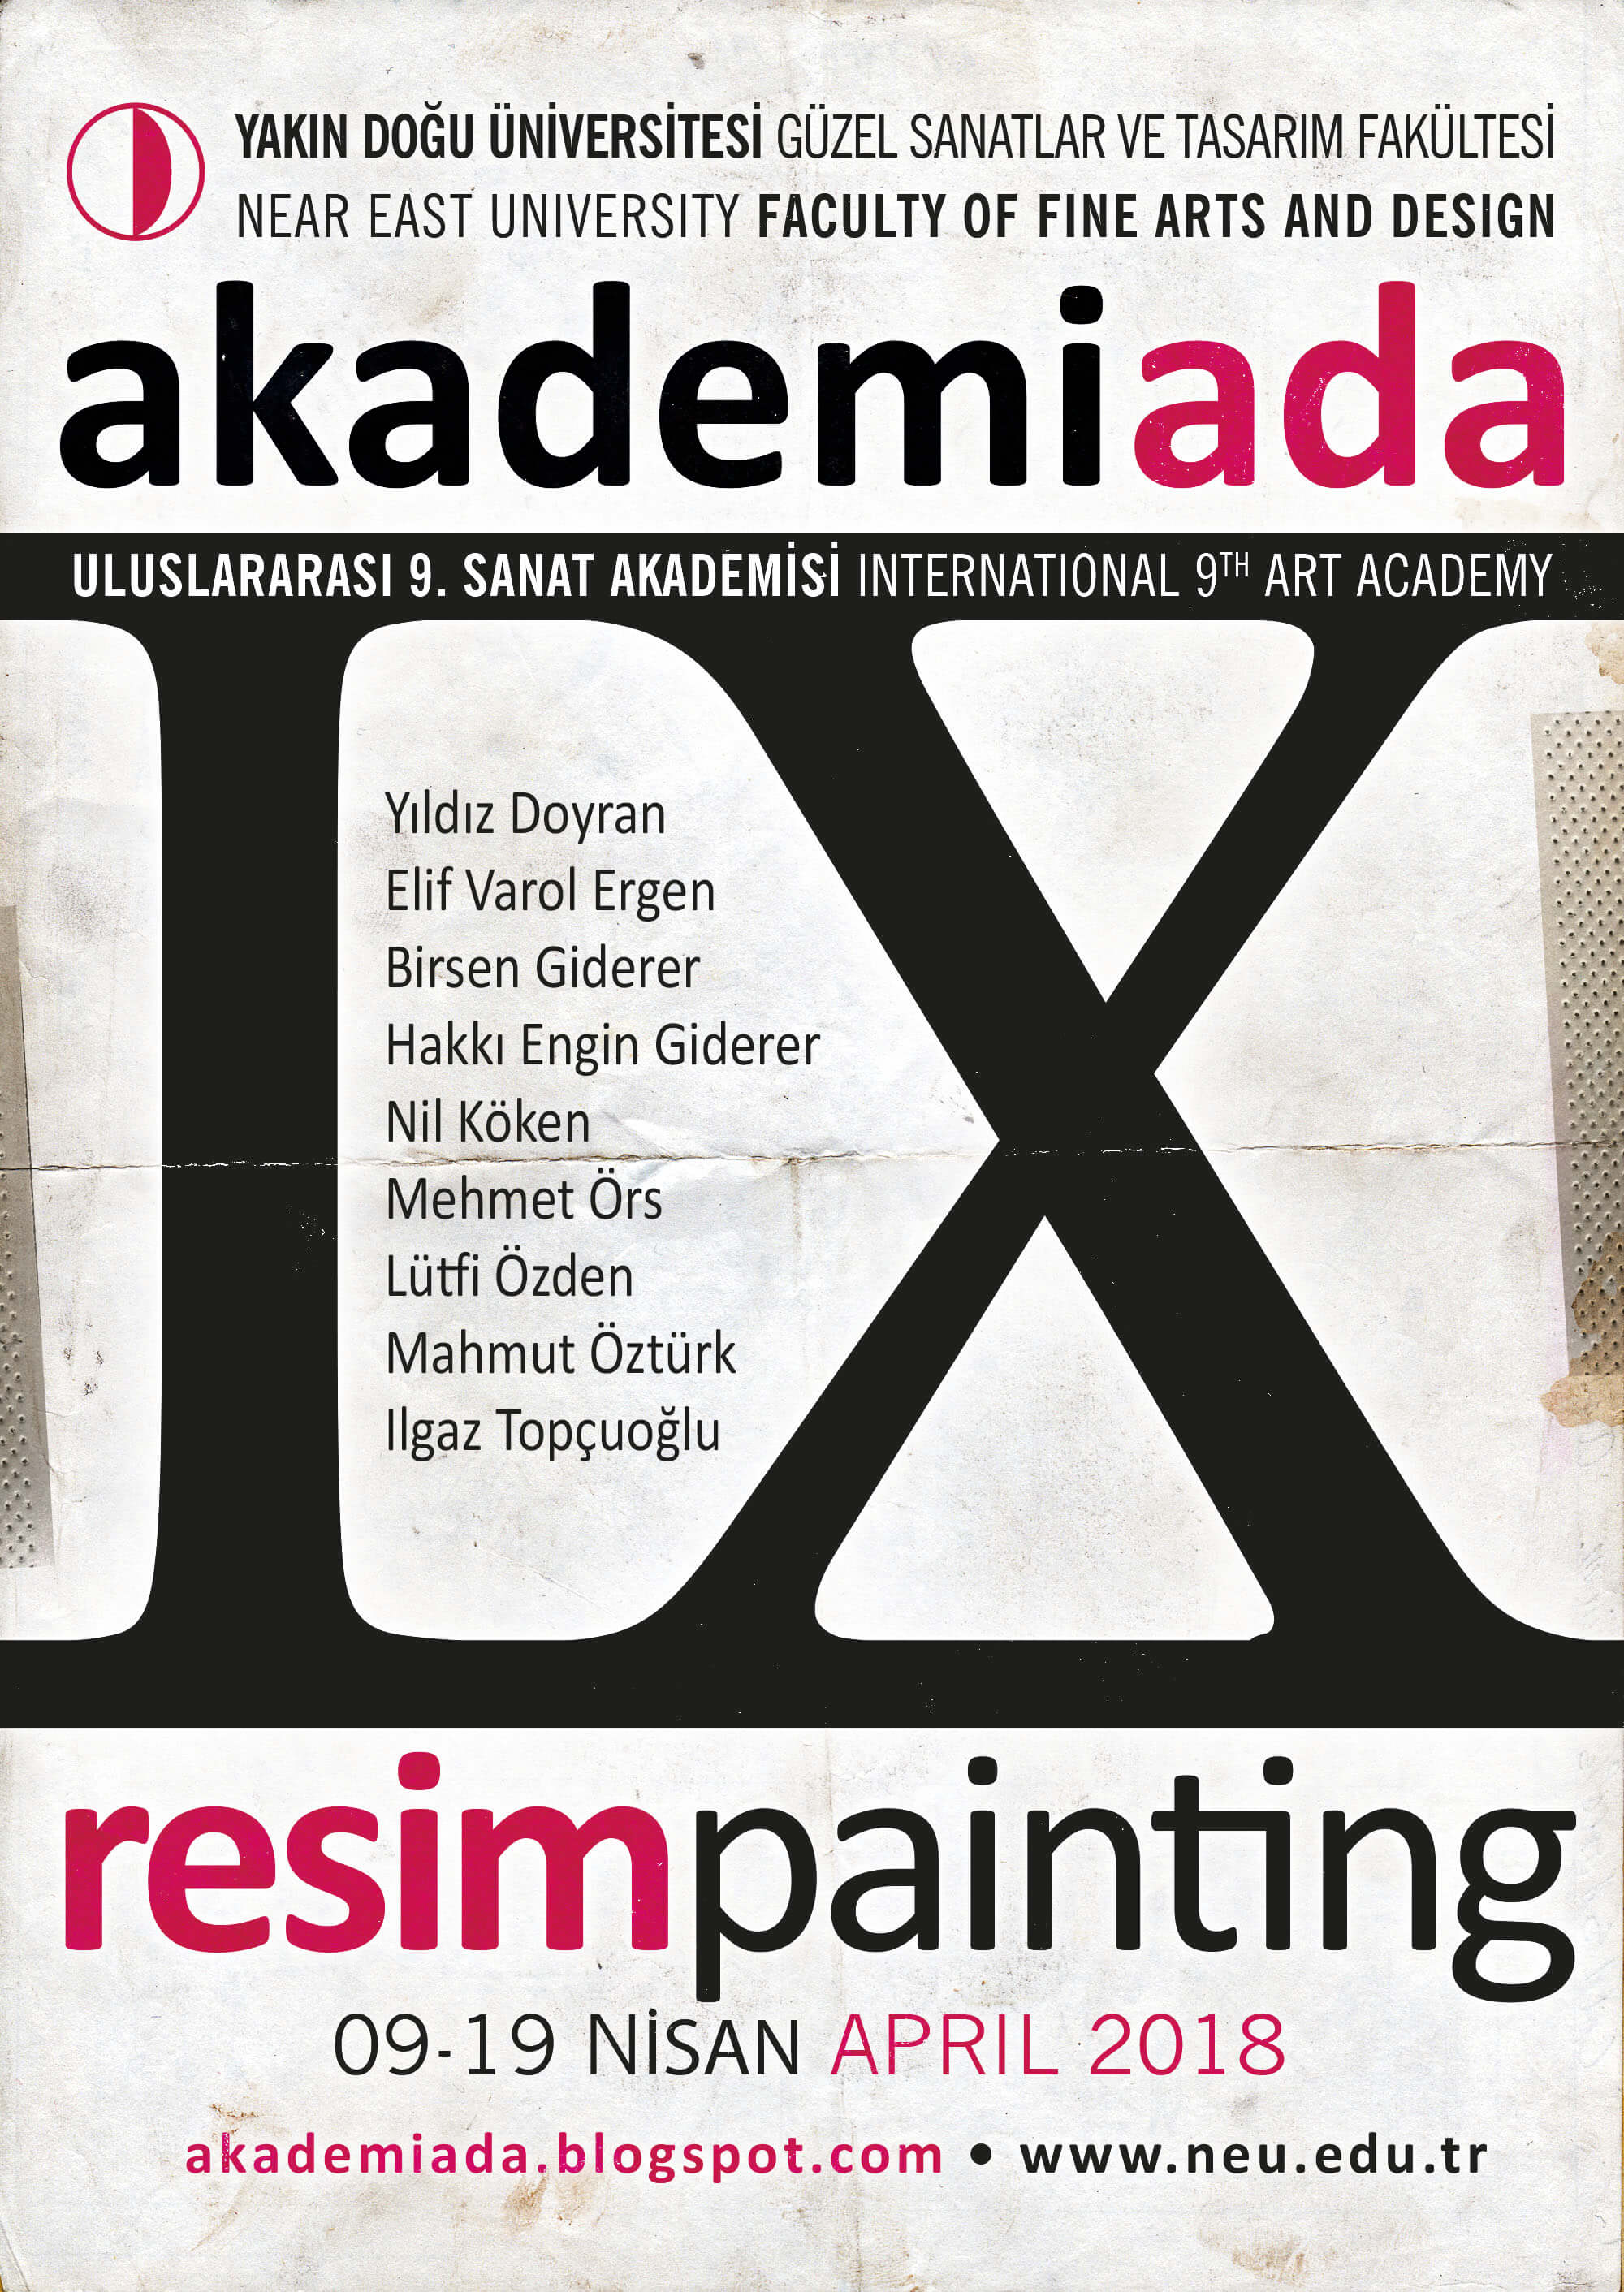 Akademiada 9 International Art Academy of  Near East University Faculty of Fine Arts and Design is beginning